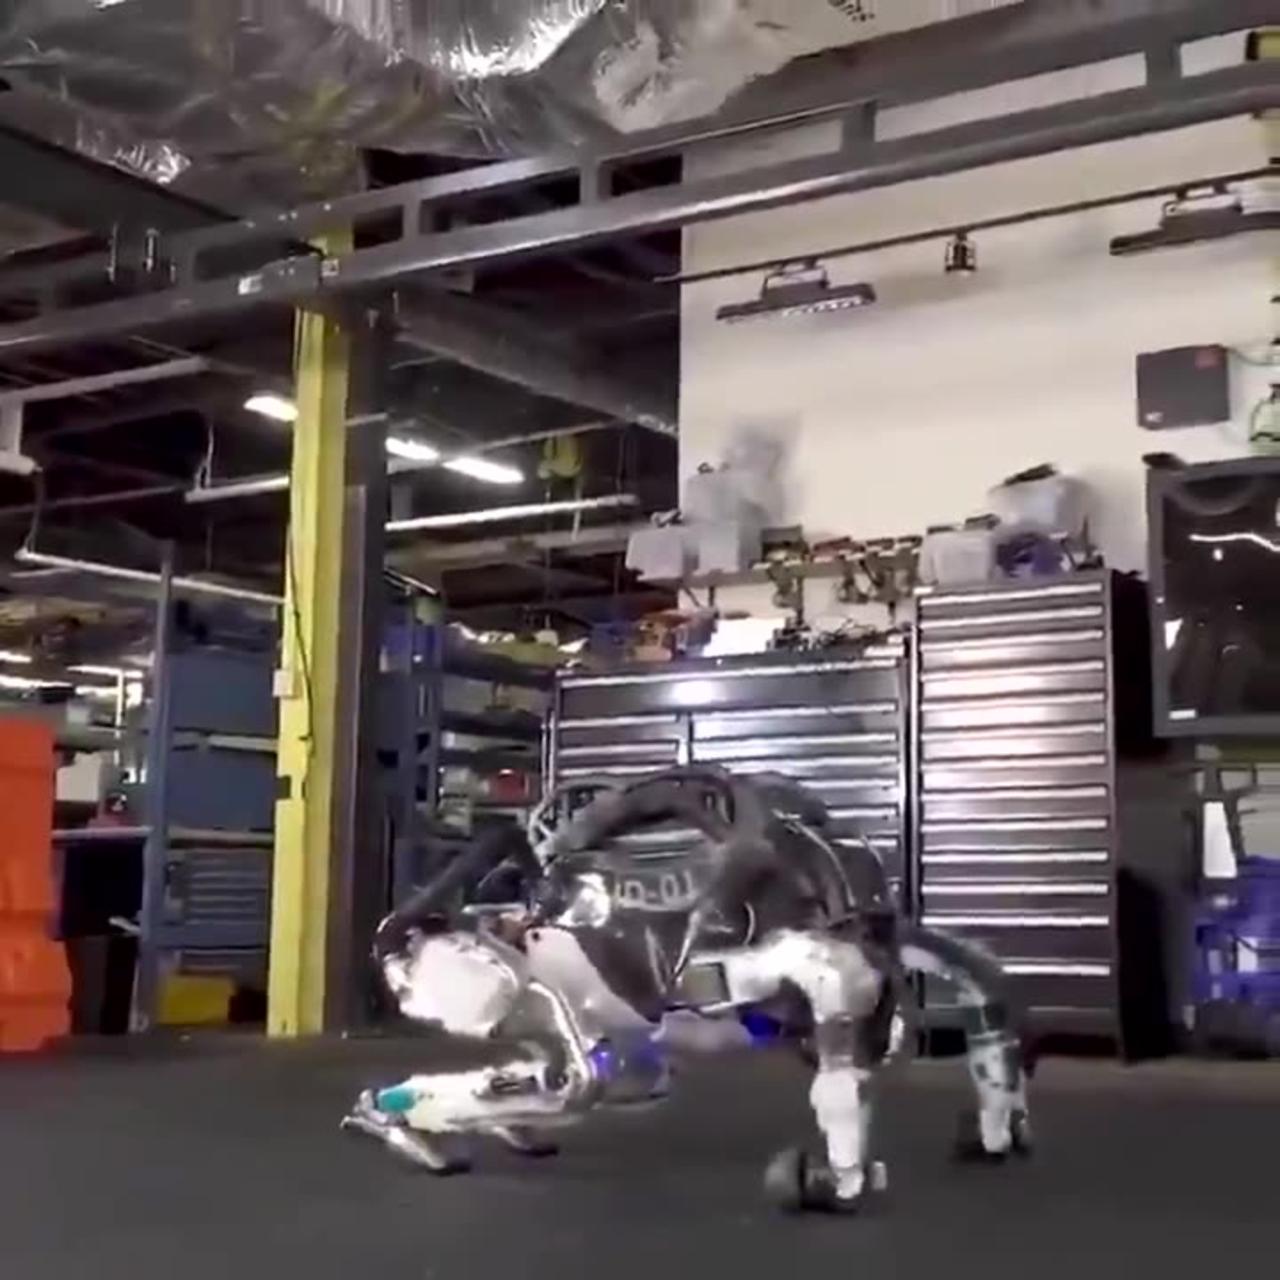 New Robot of Boston Dynamics.